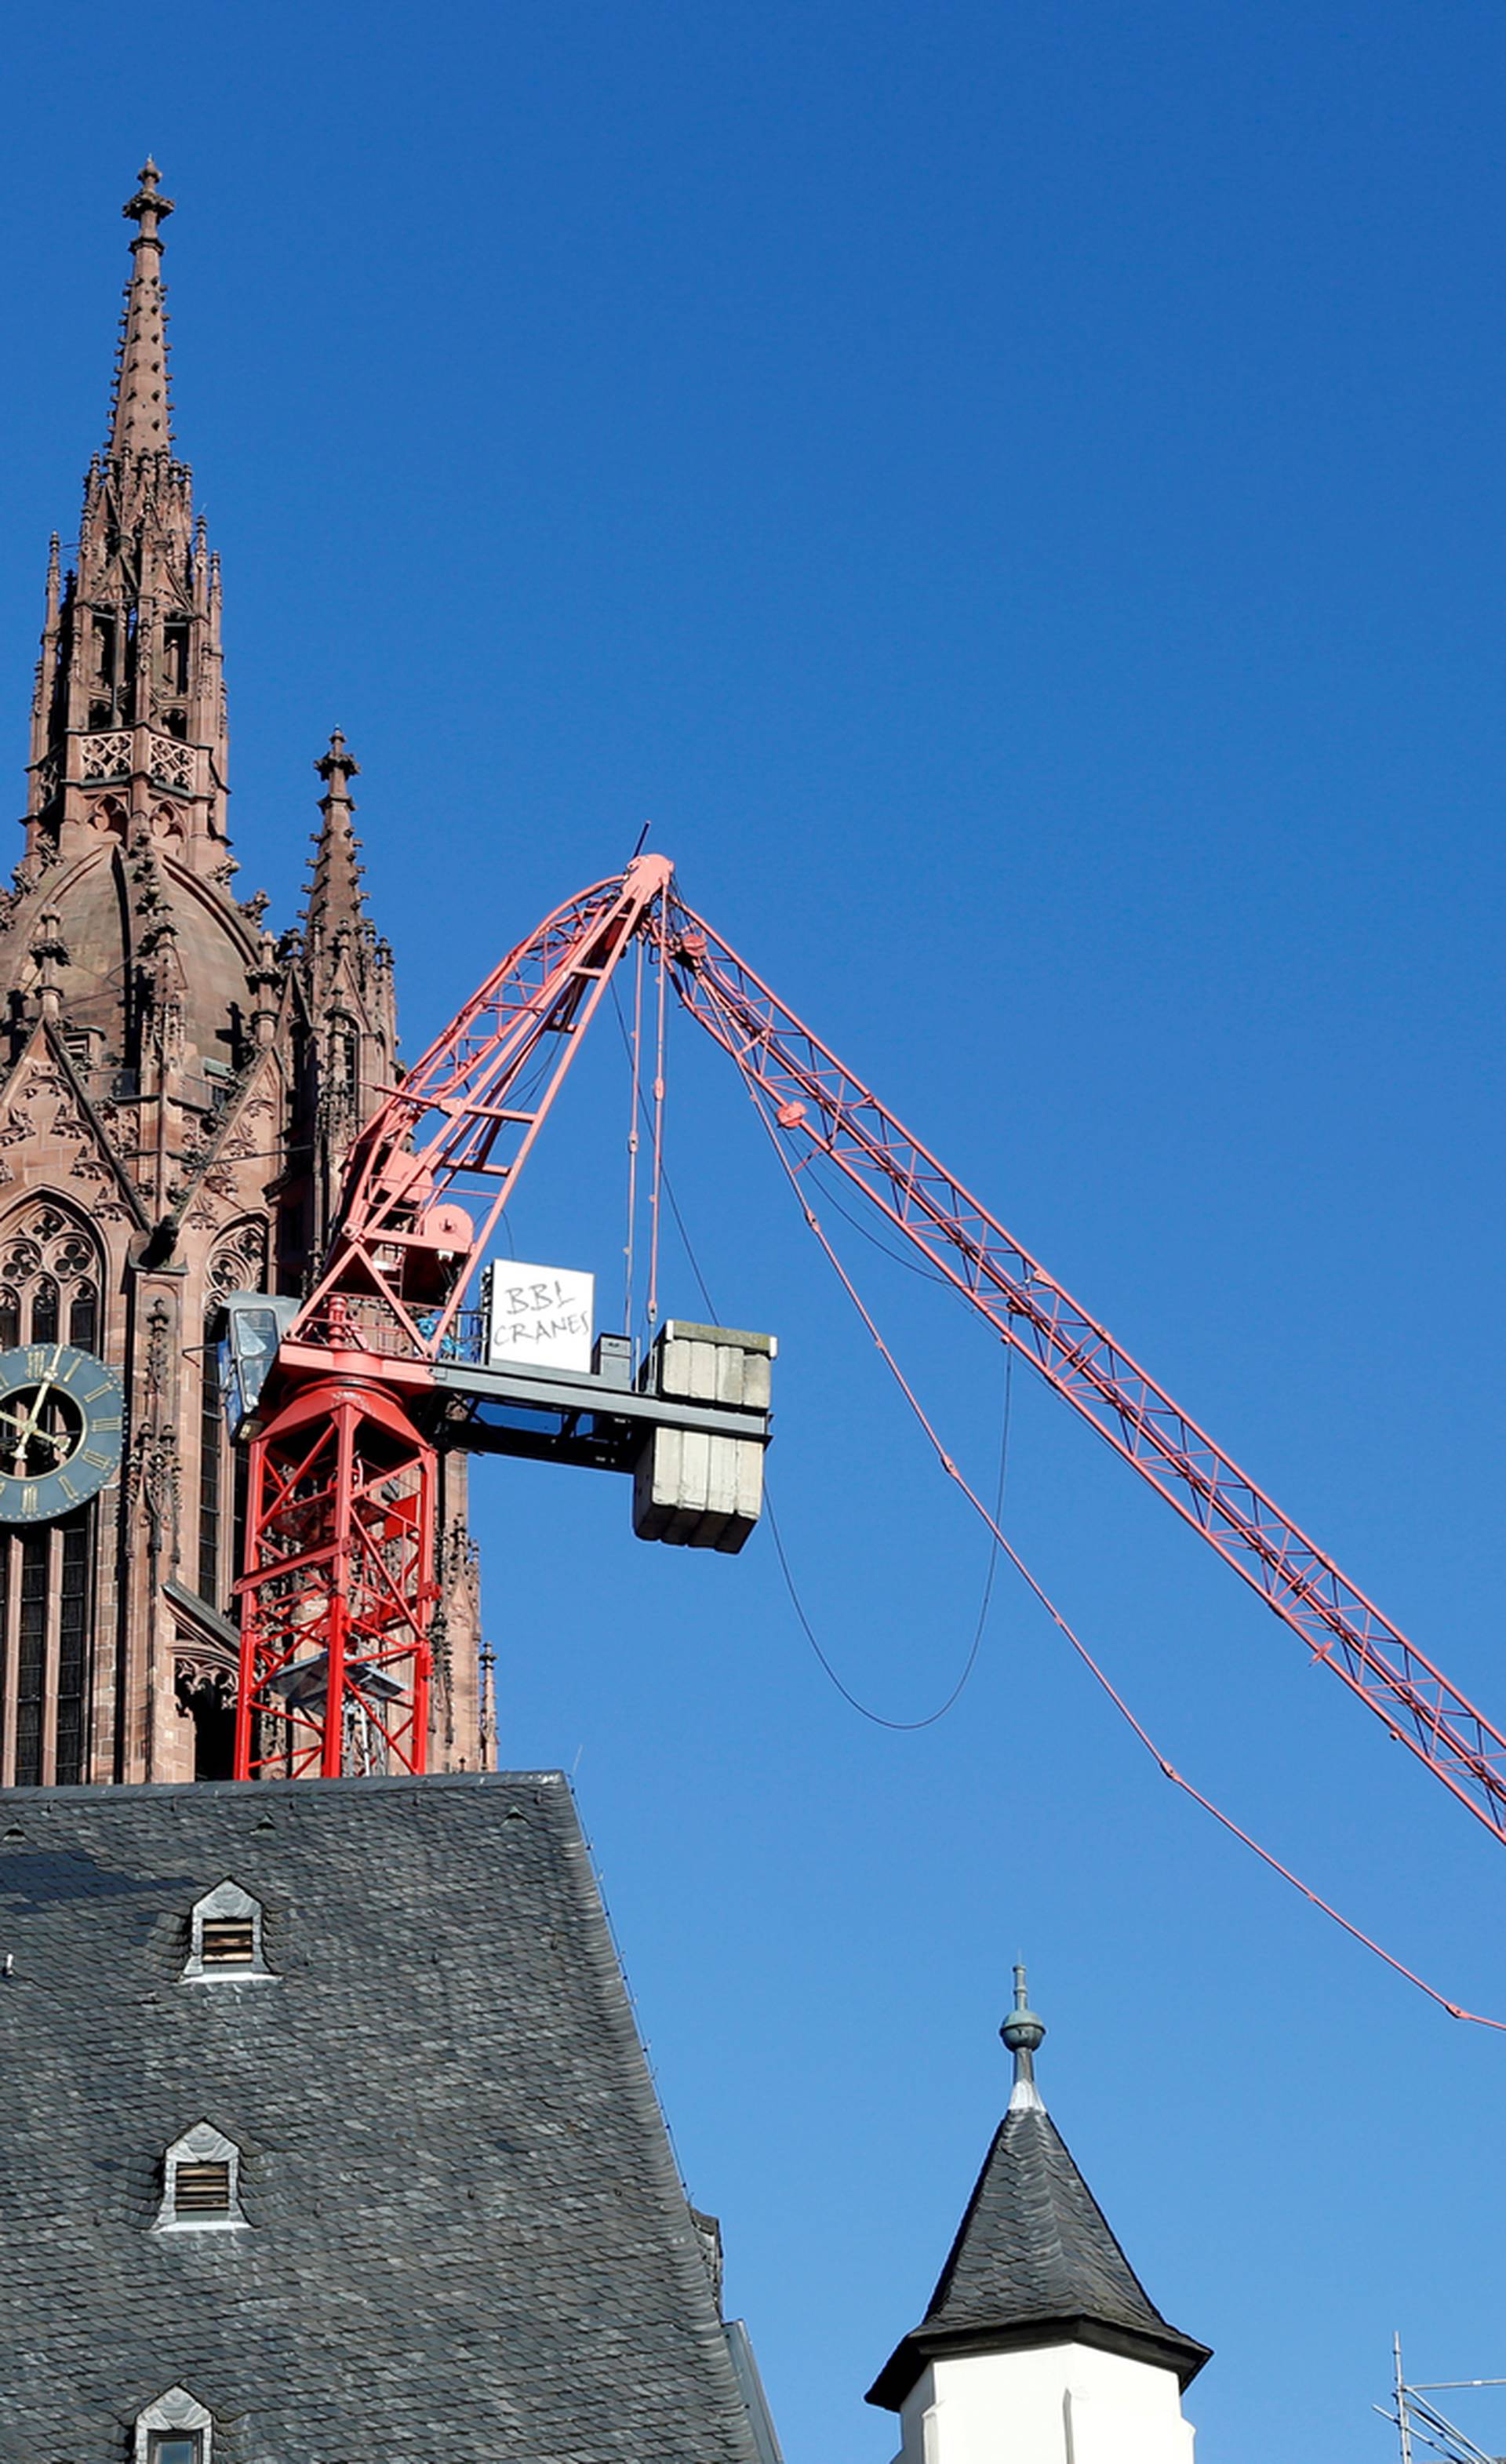 Oluja srušila kran na obnovljeni krov katedrale u Frankfurtu